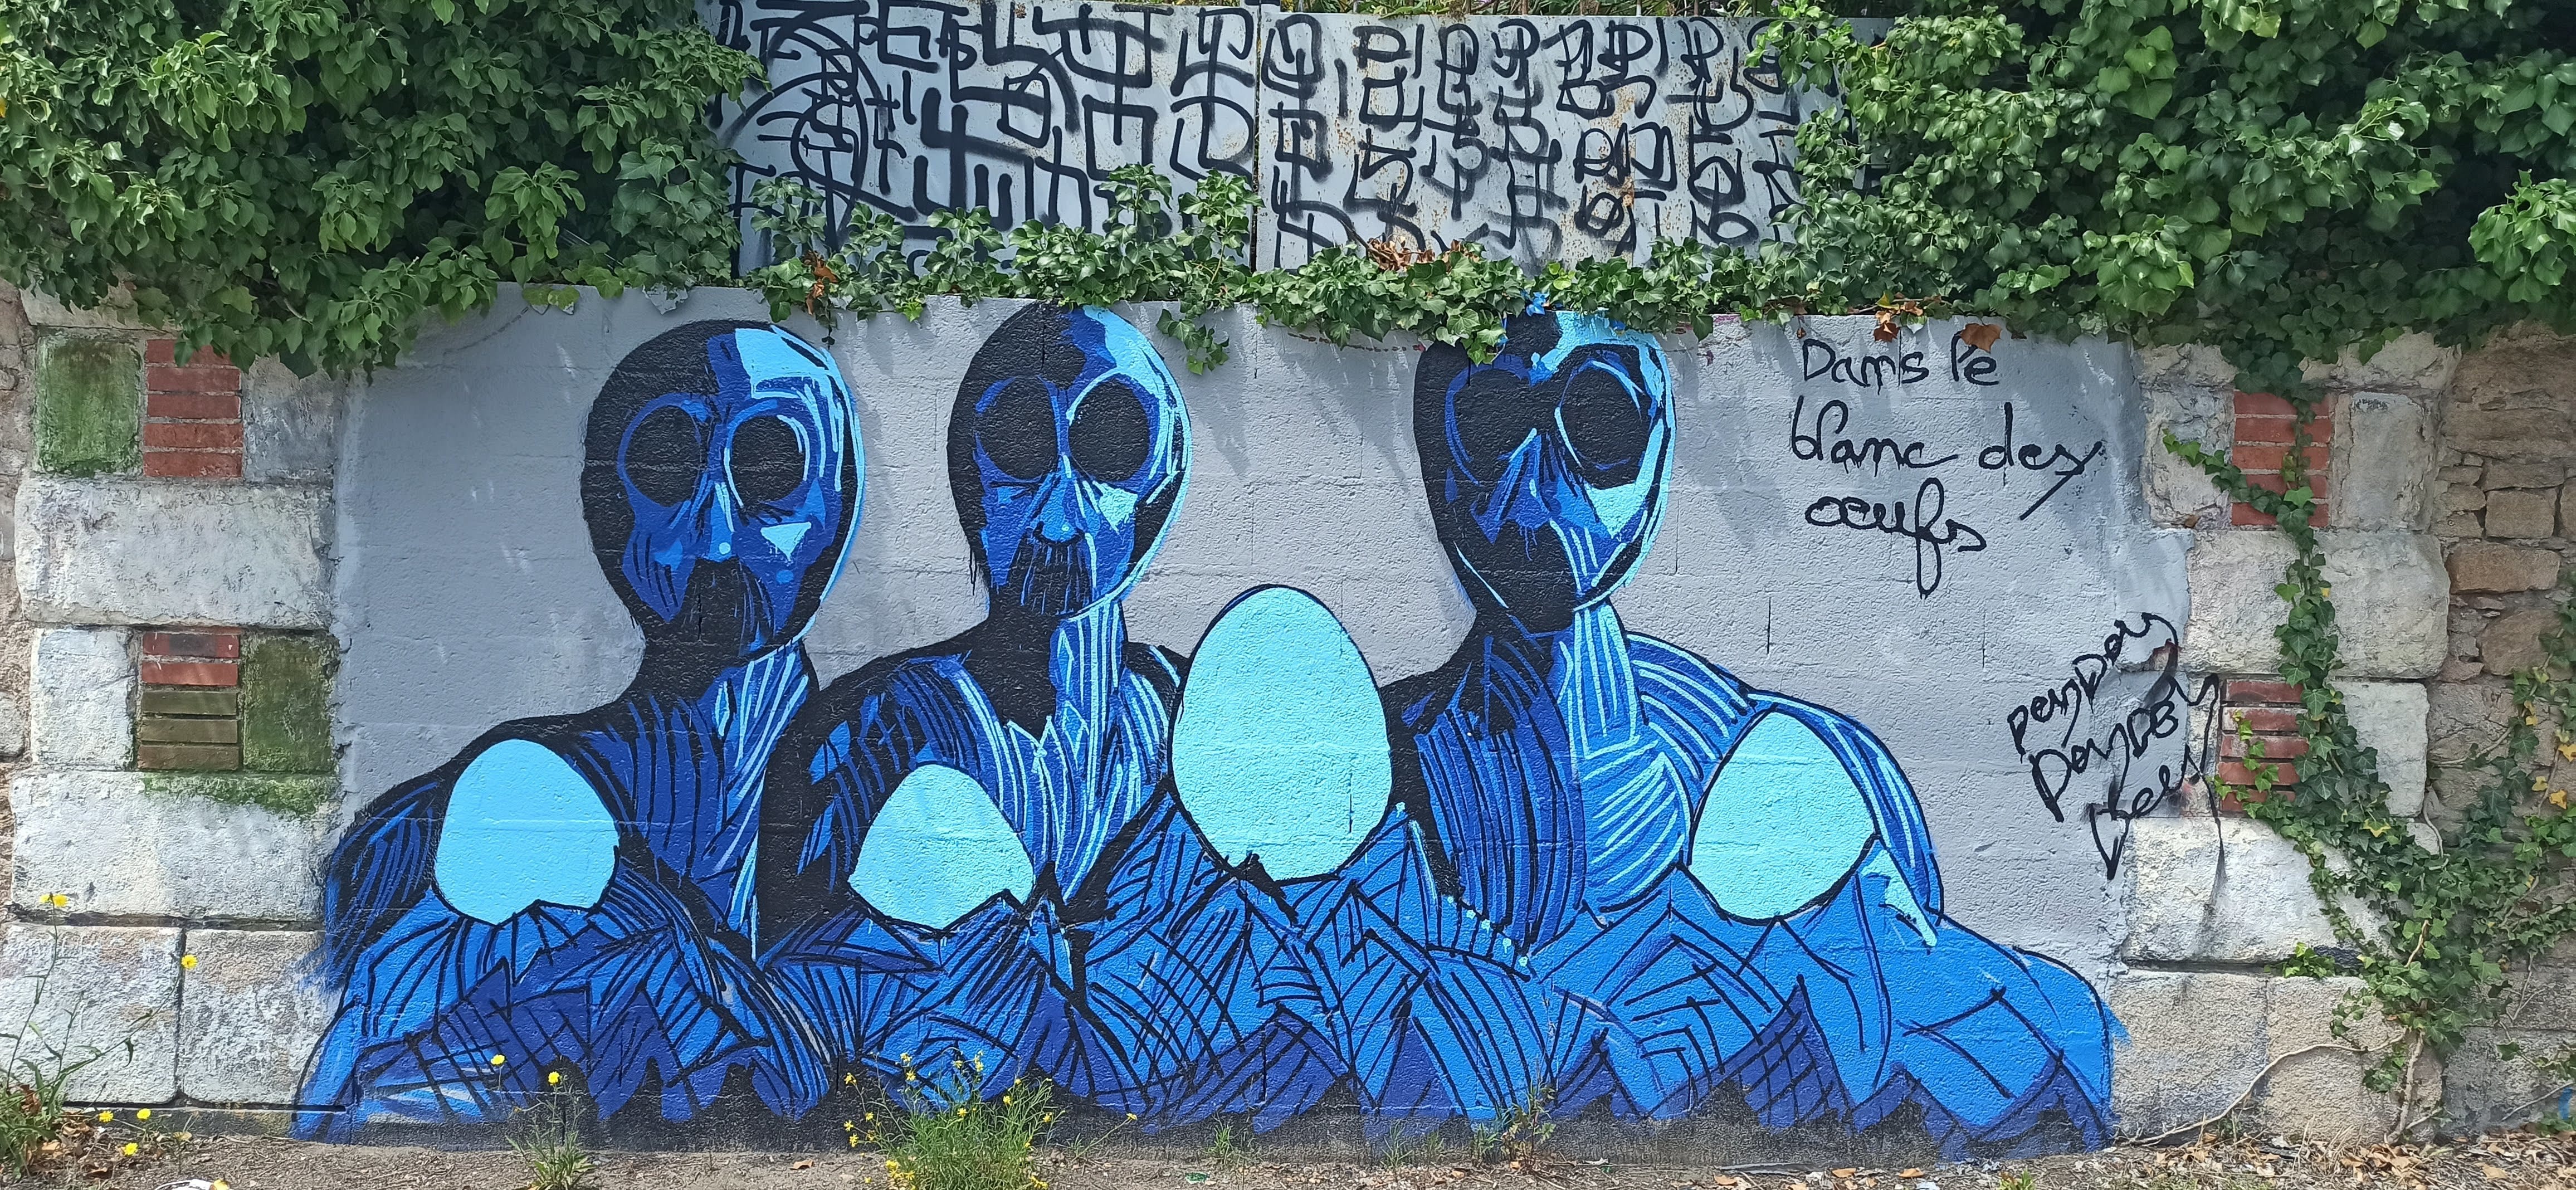 Graffiti 5206 Dans le blanc des oeufs captured by Rabot in Nantes France